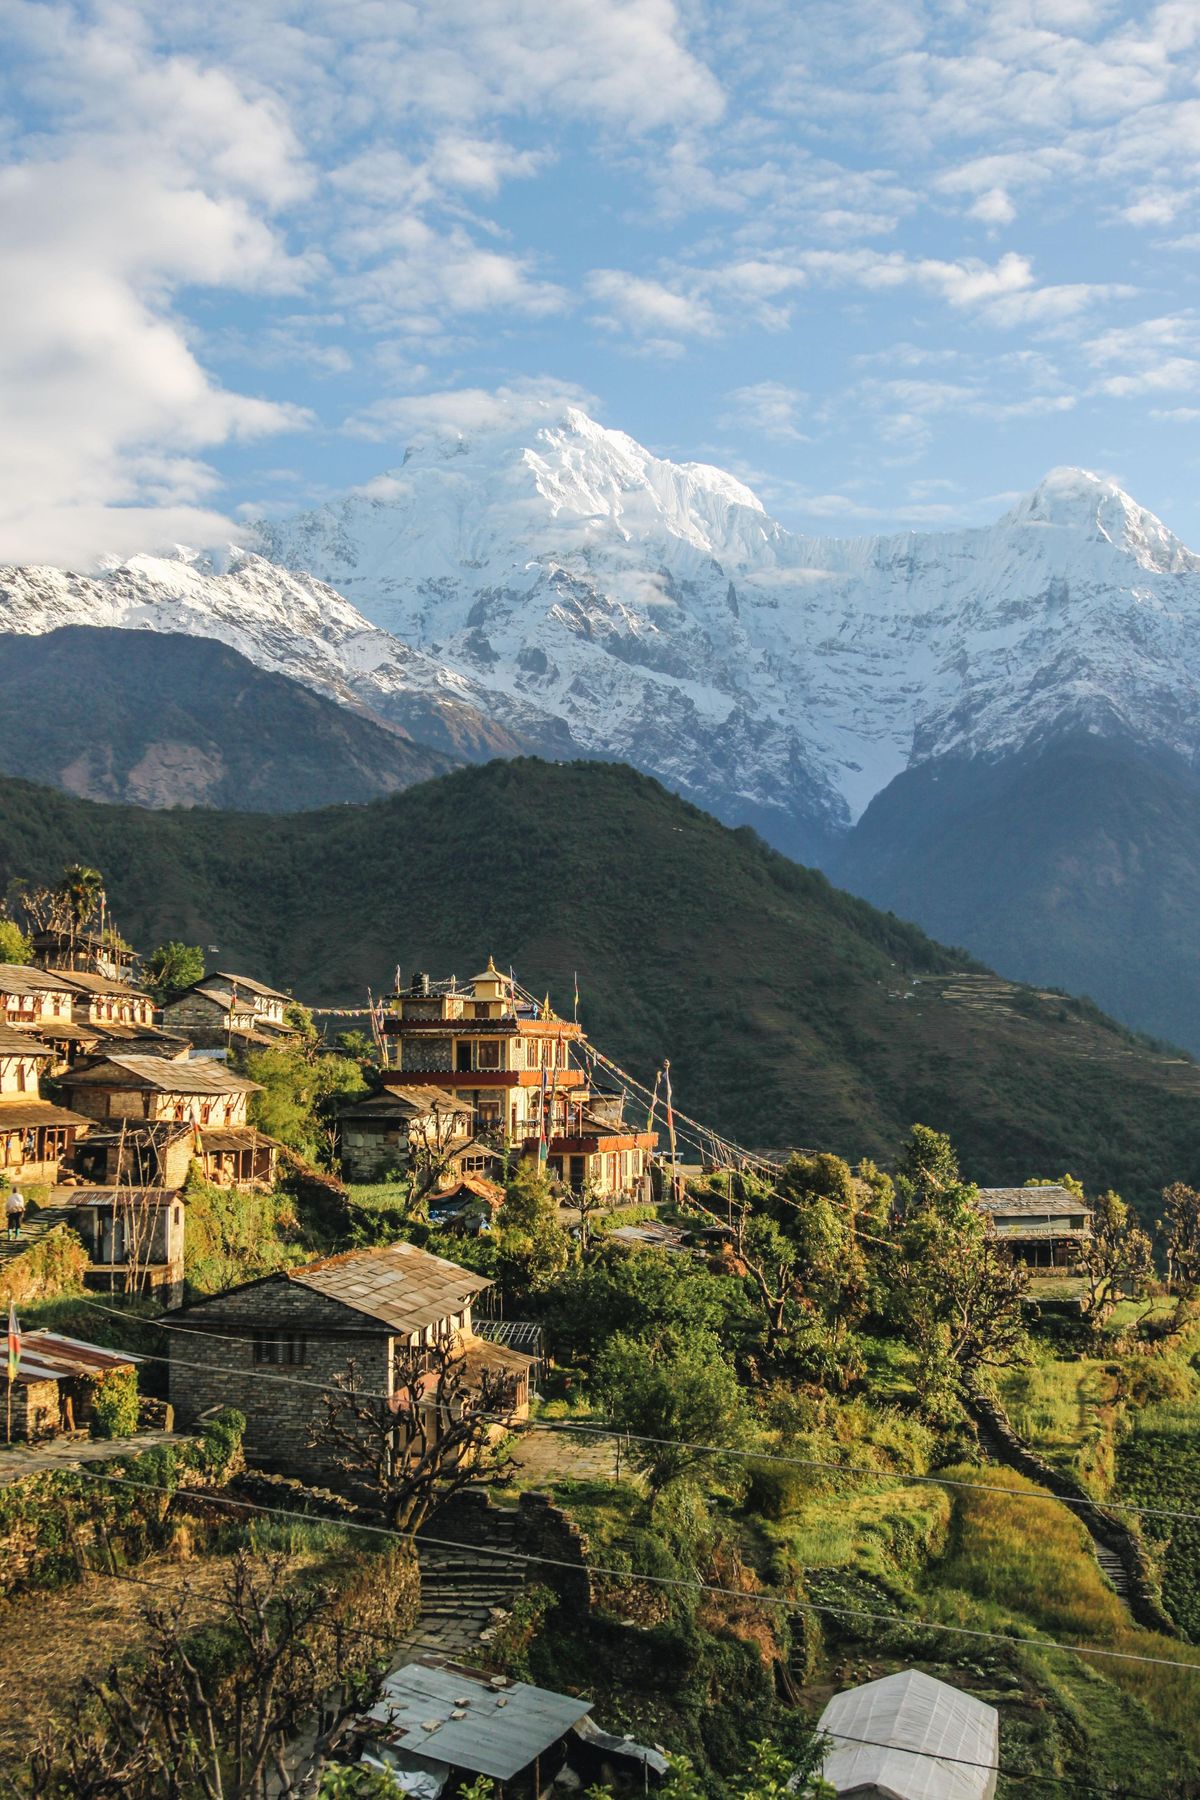 Nepal houses below mountain range